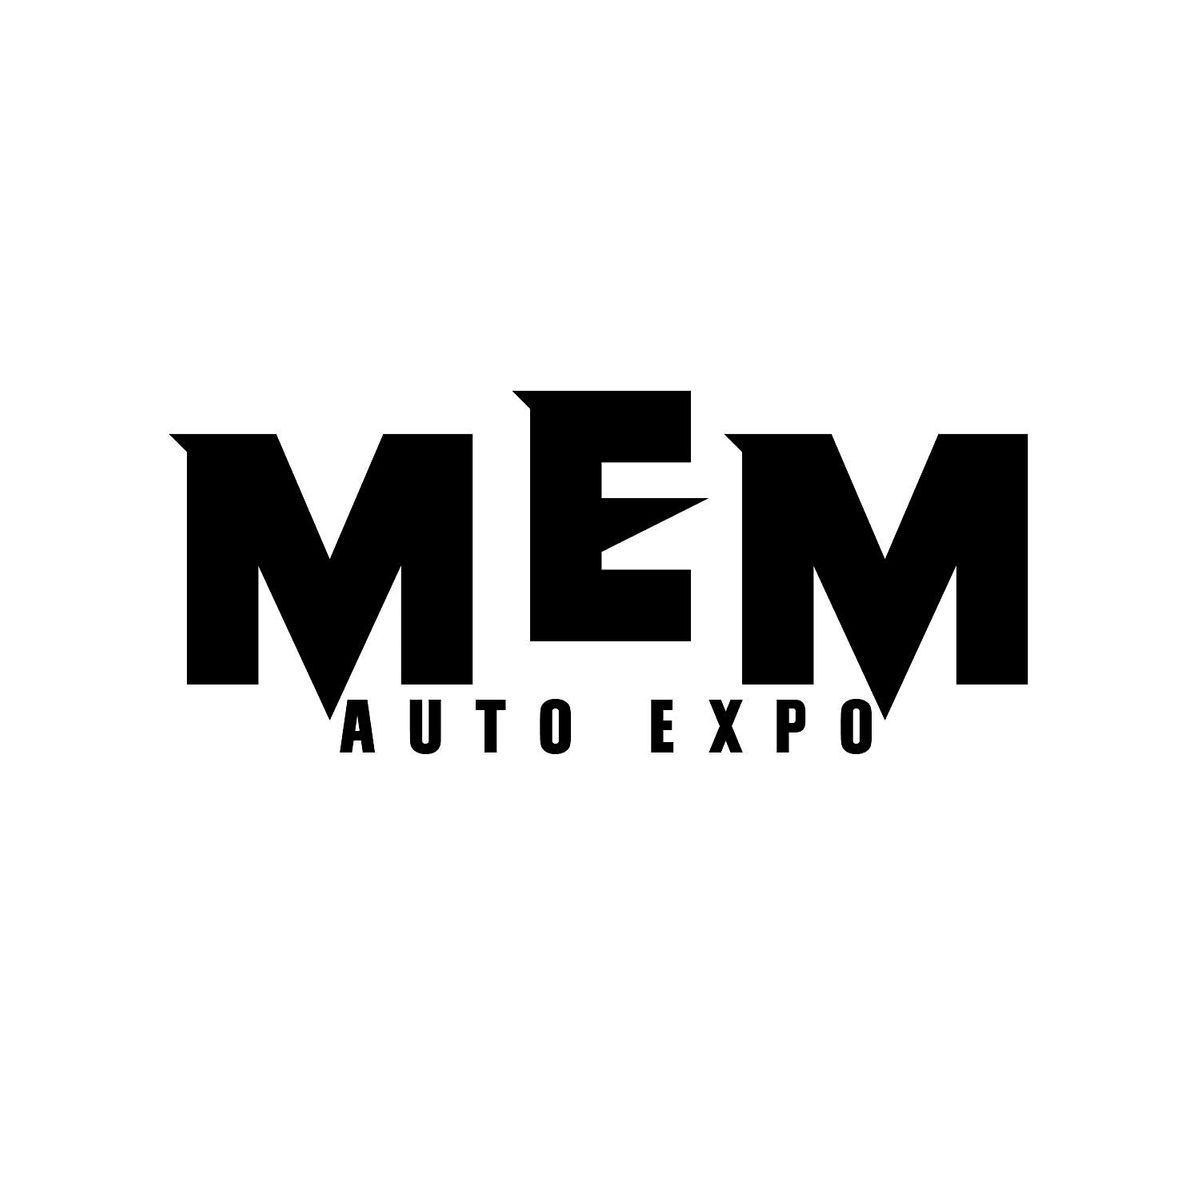 MeM Auto Expo